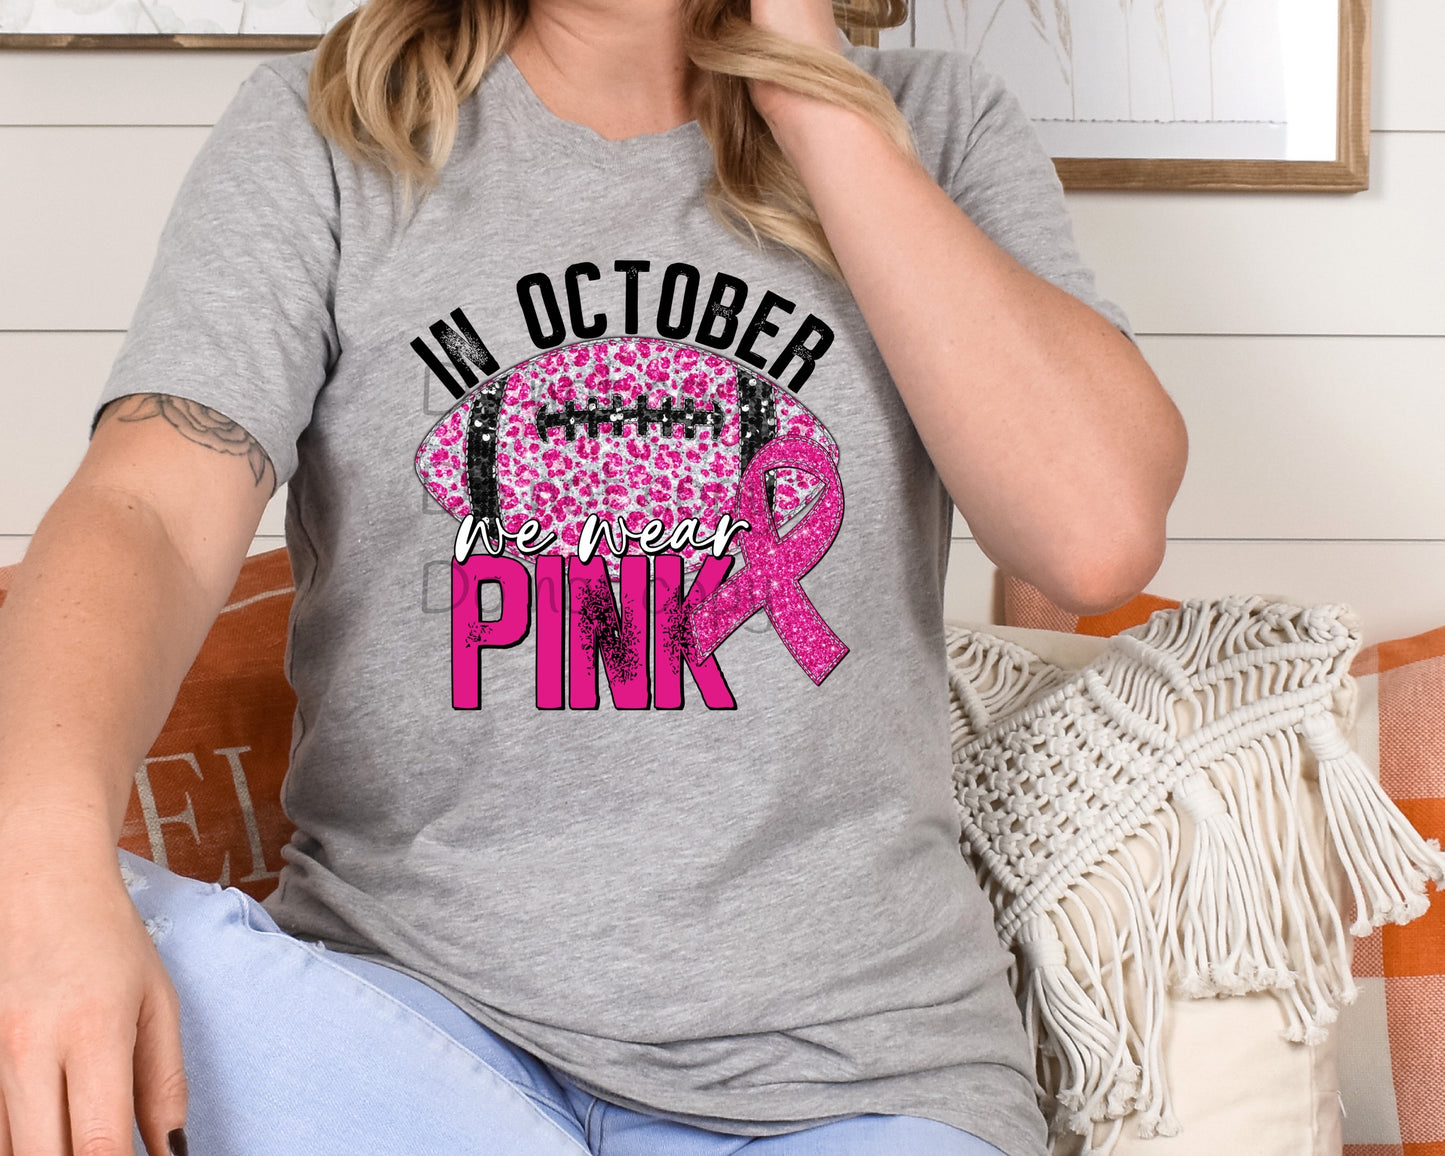 In October we wear pink football-DTF